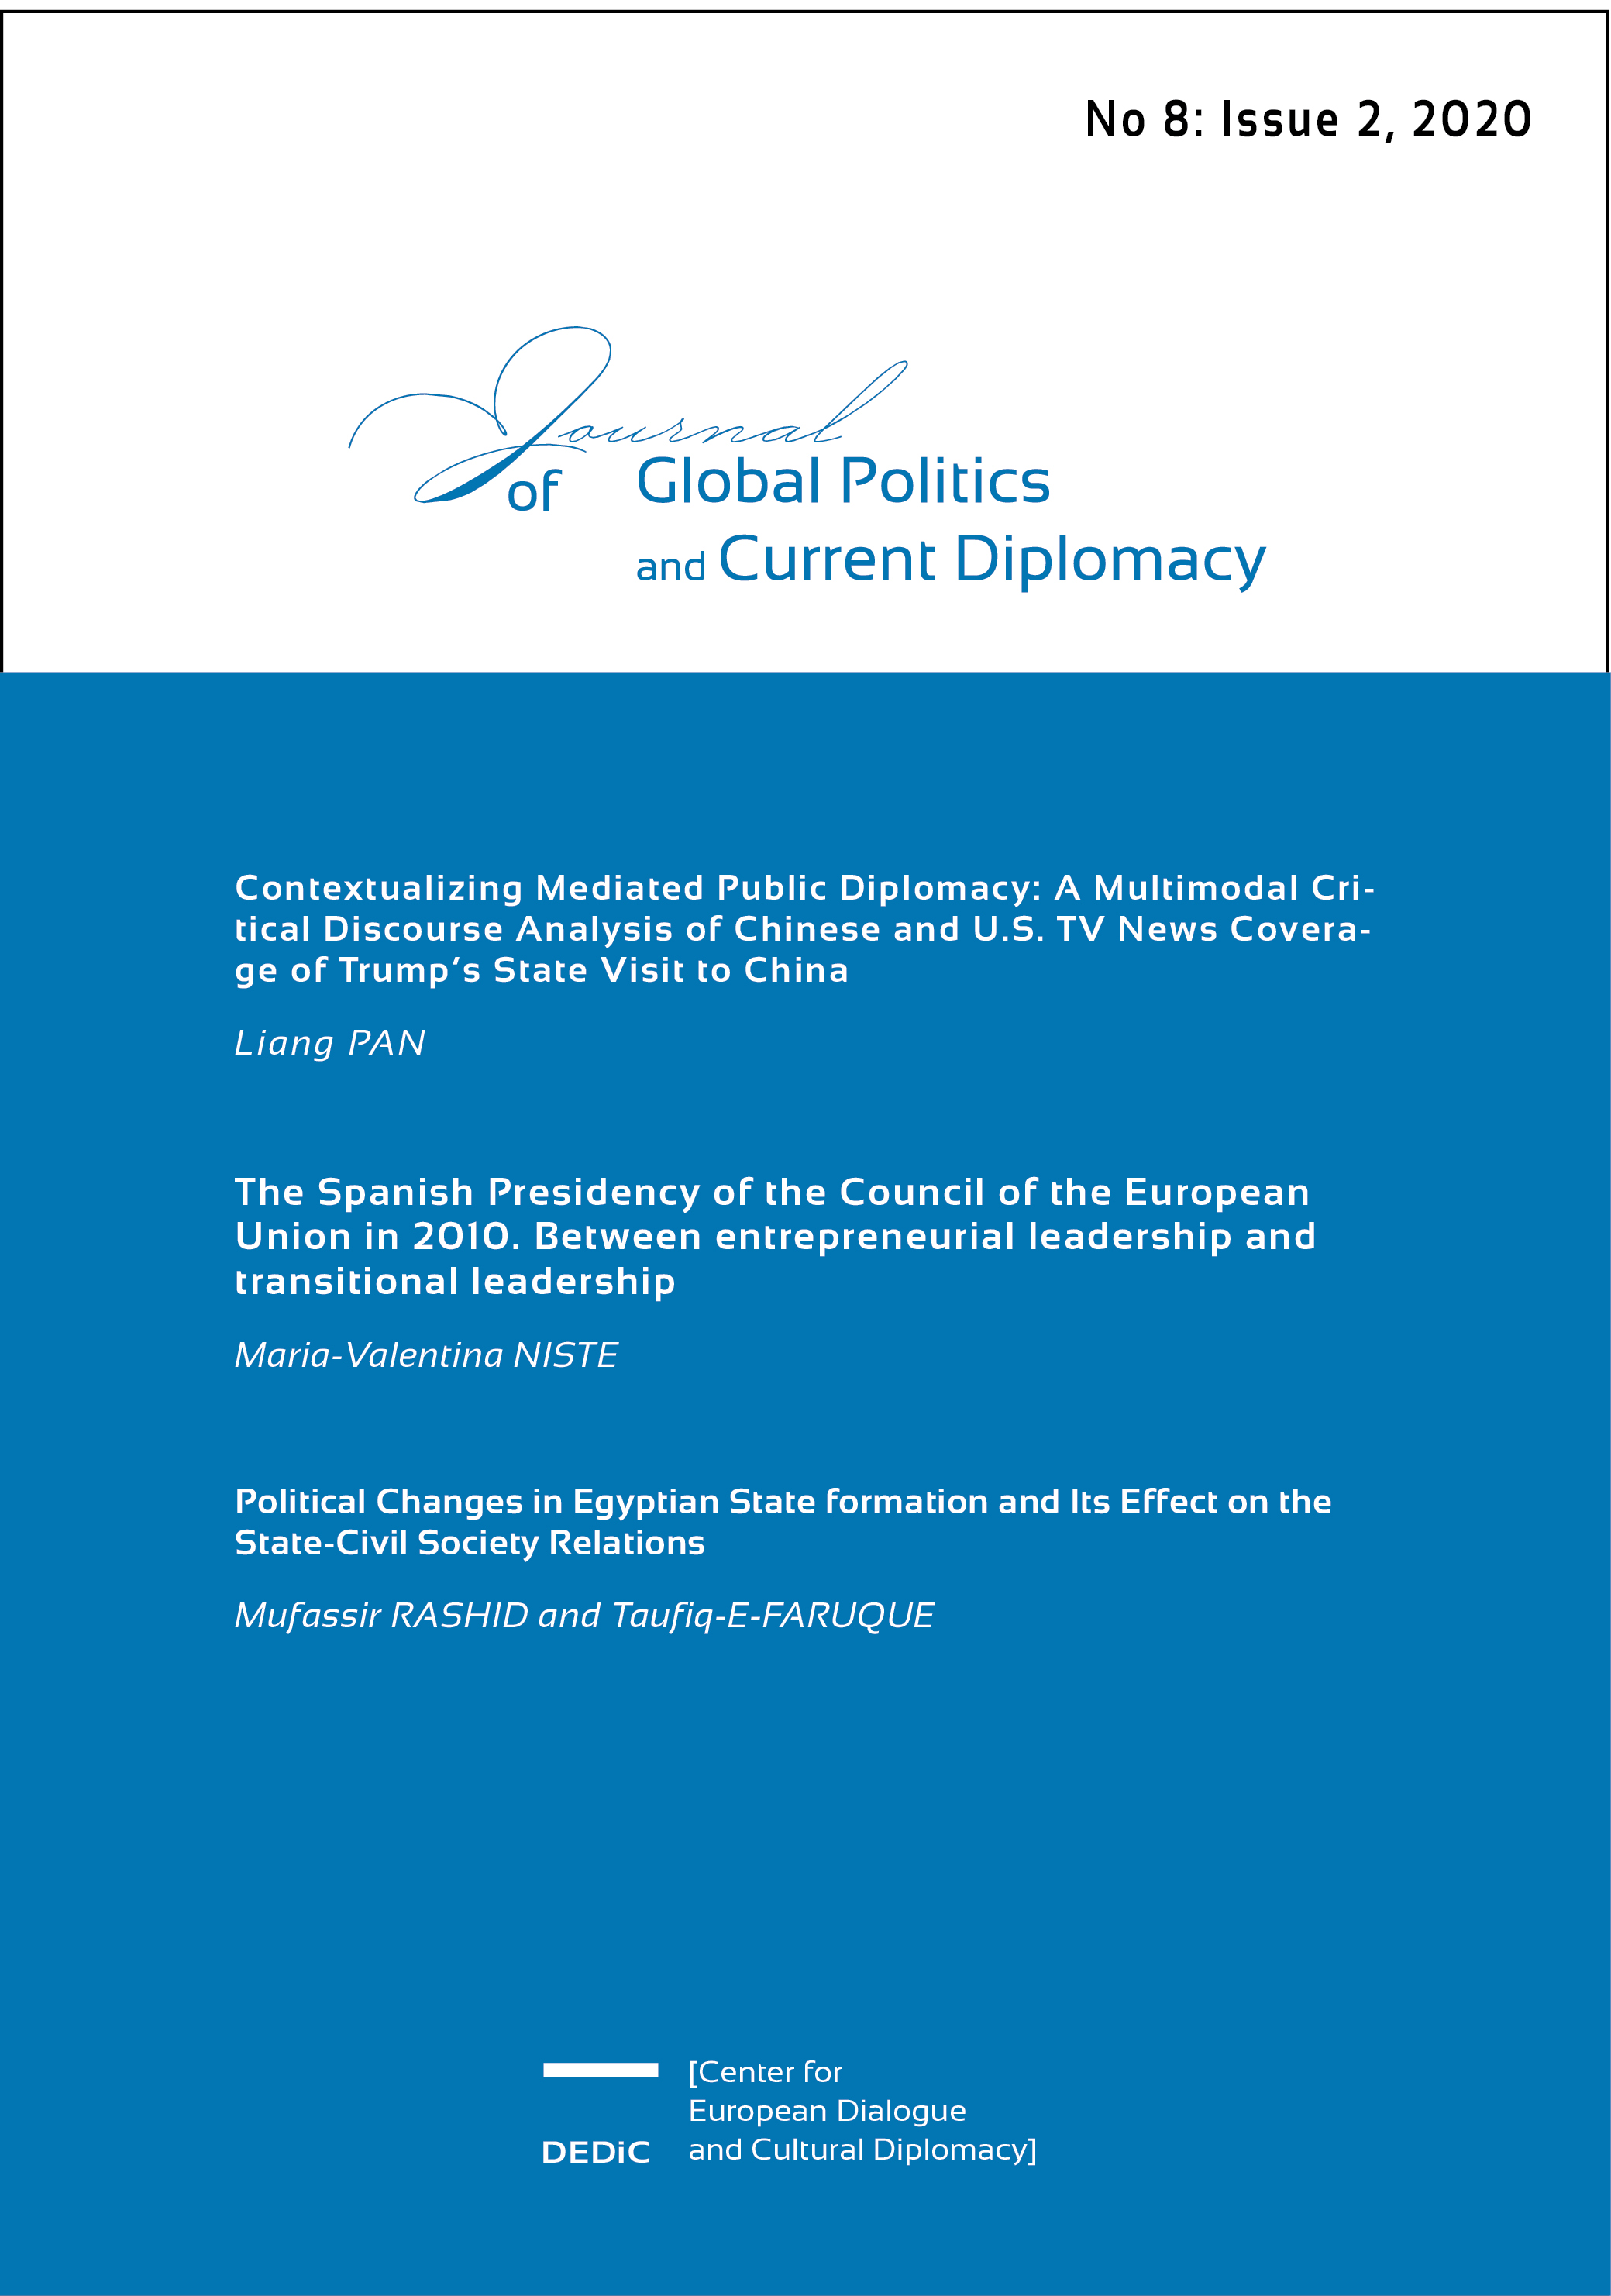 Contextualizing Mediated Public Diplomacy